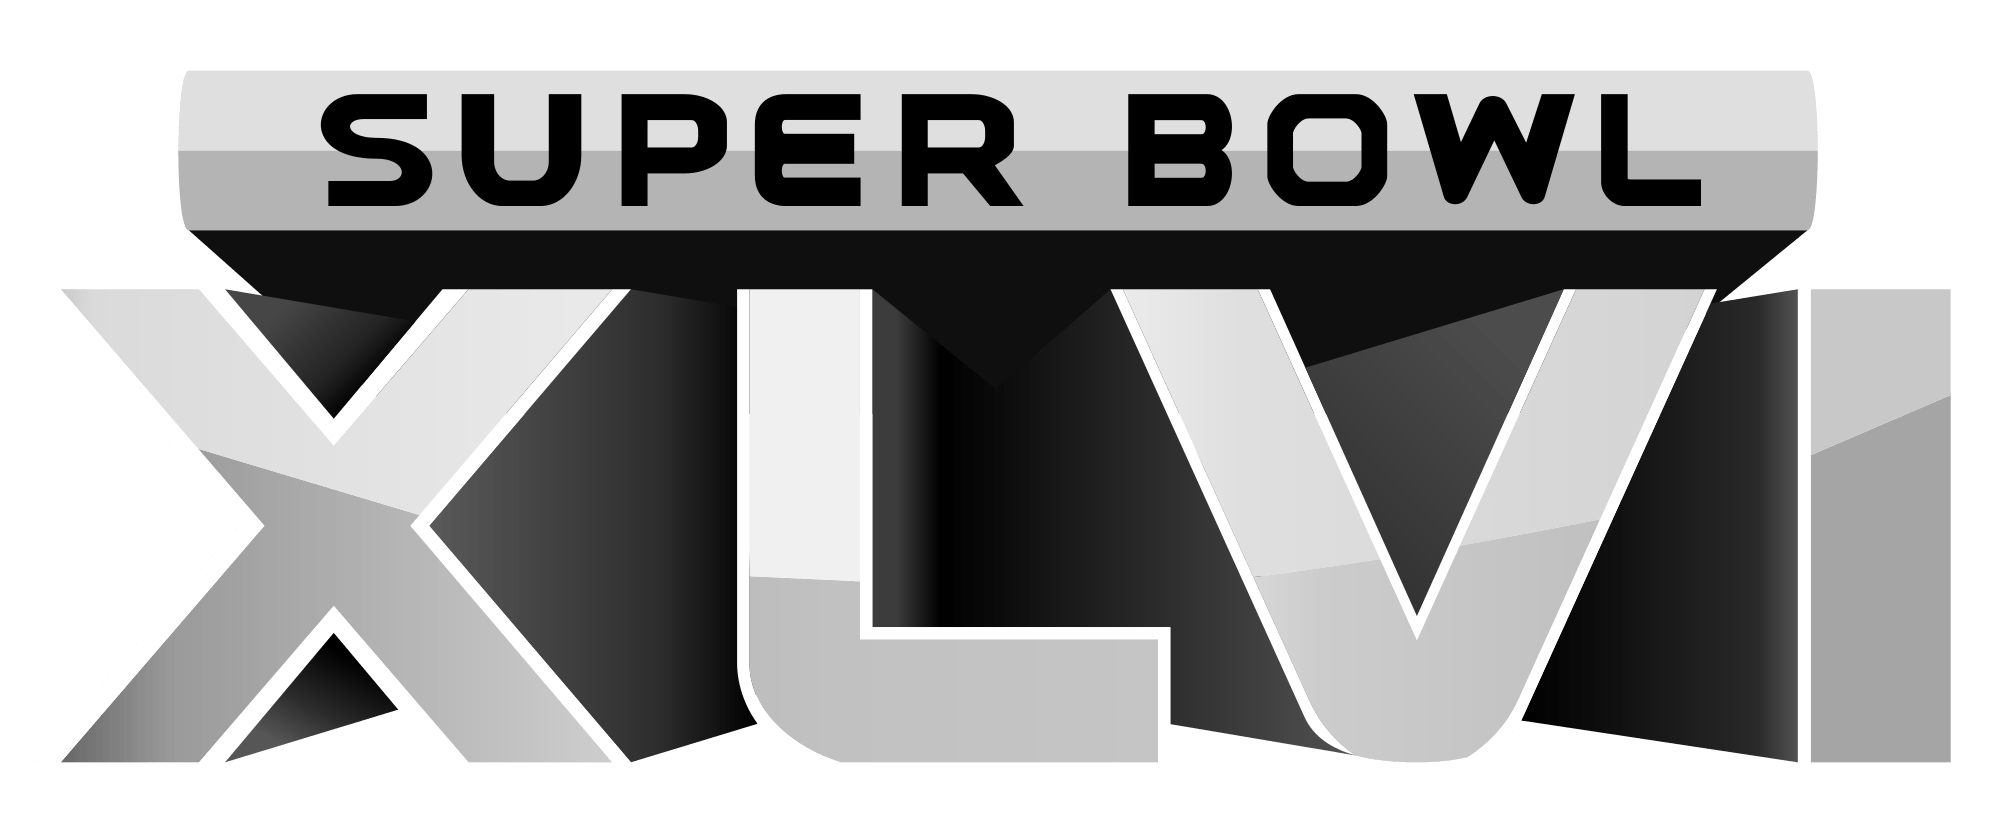 XLVI Logo - File:Super Bowl XLVI Logo.svg - Wikimedia Commons